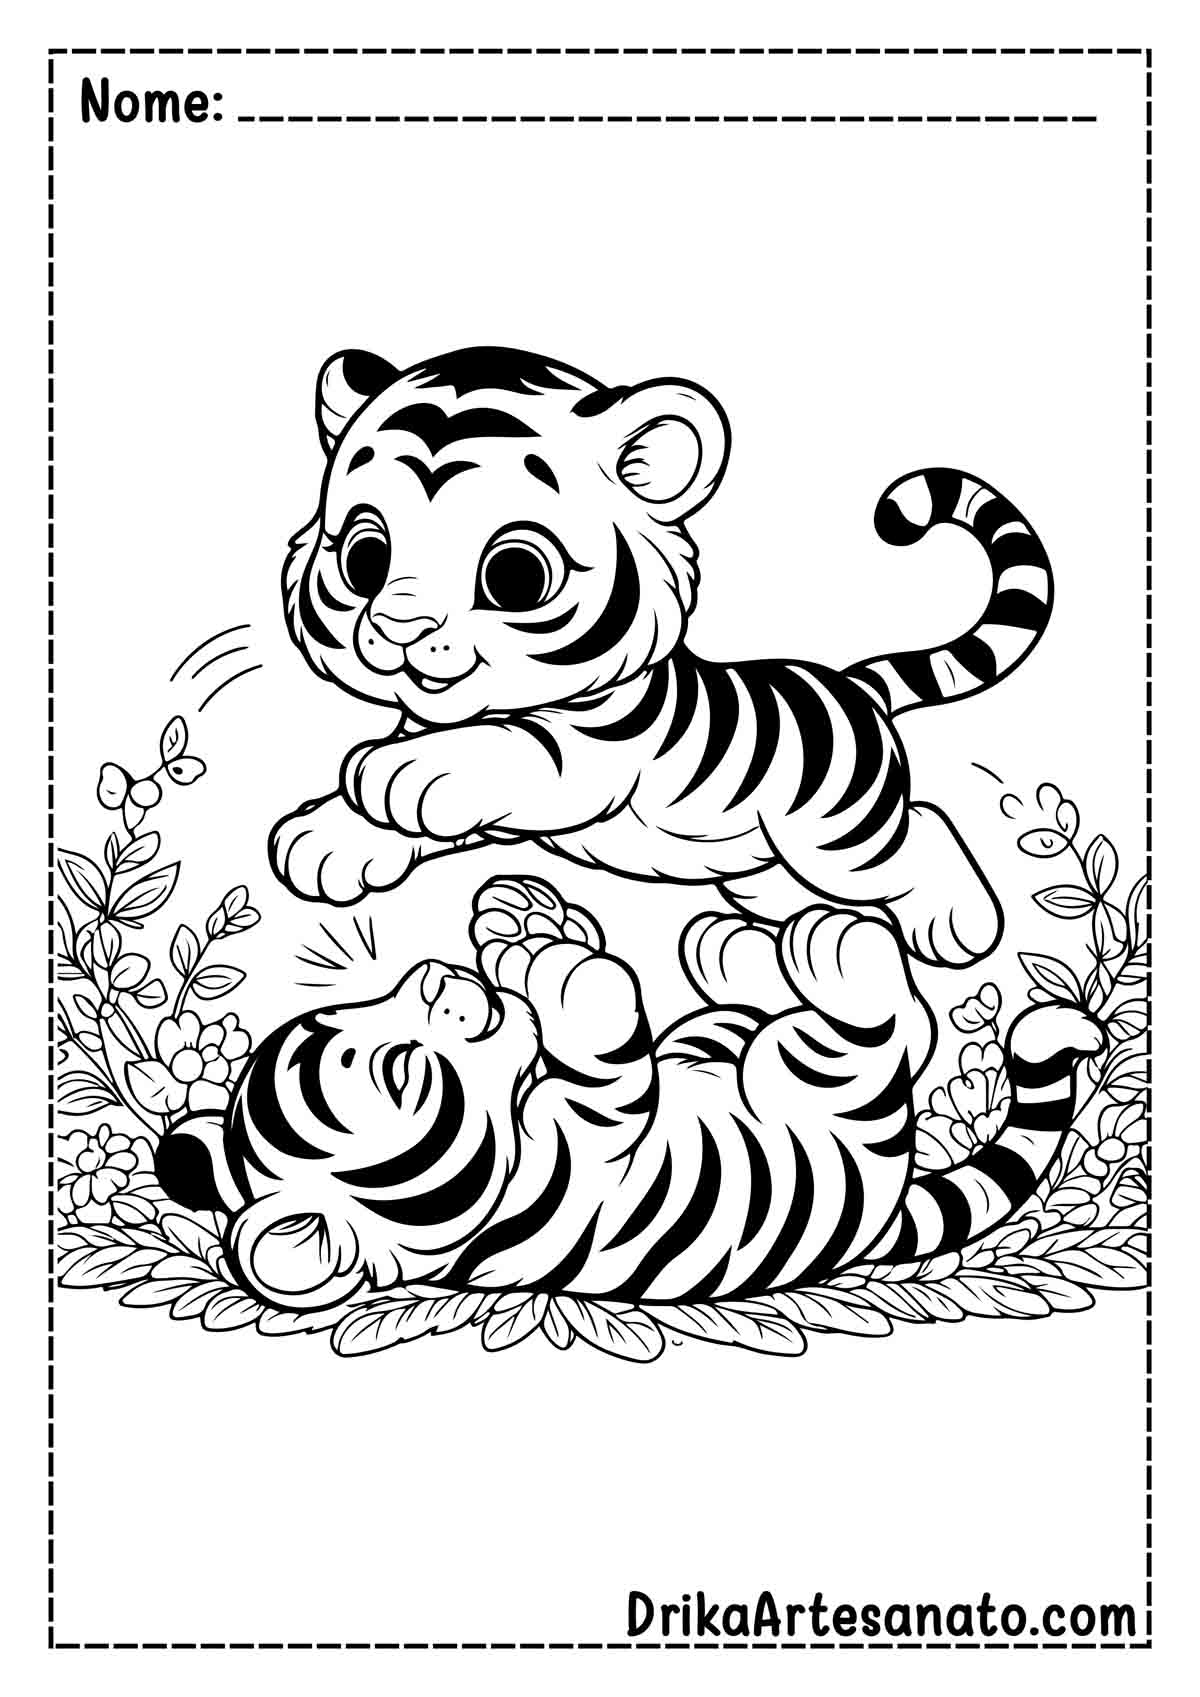 Desenho de Tigre Infantil para Colorir e Imprimir